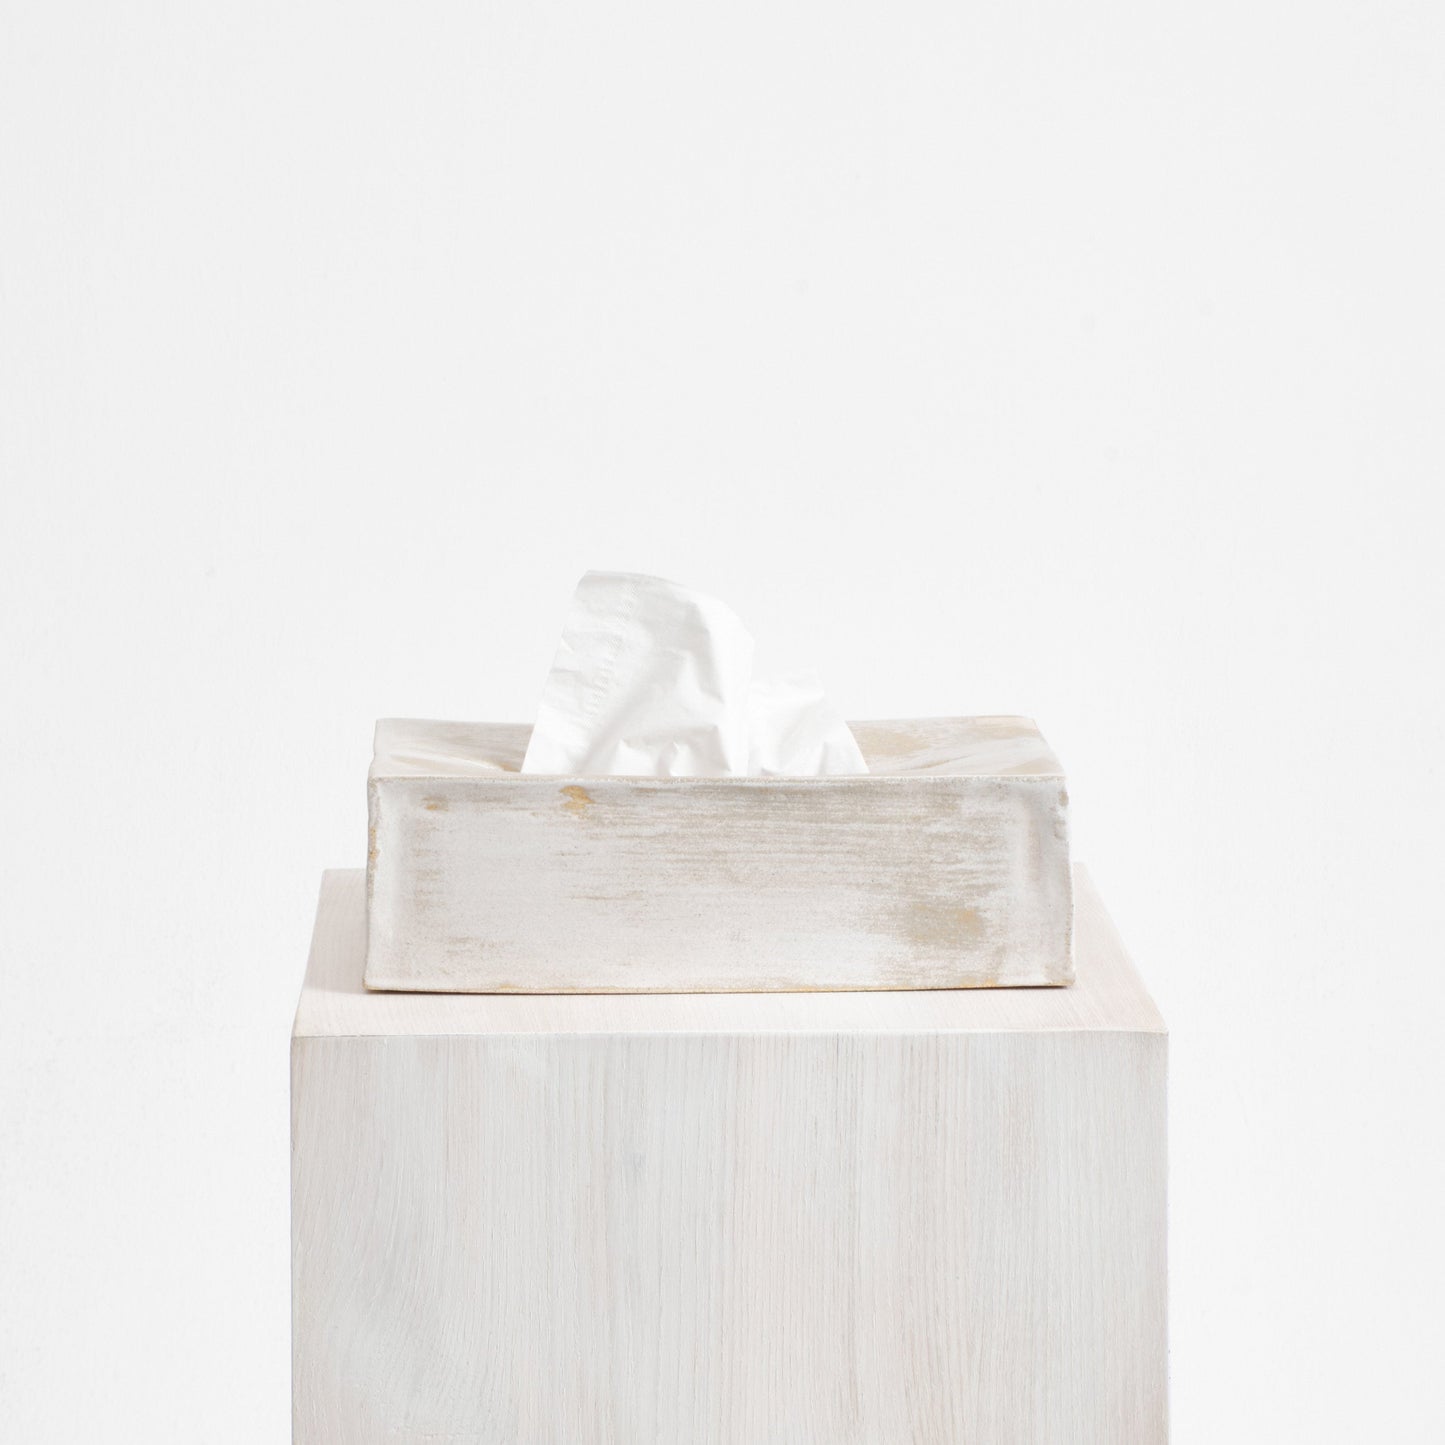 Ceramic Tissue Box in Brushed White